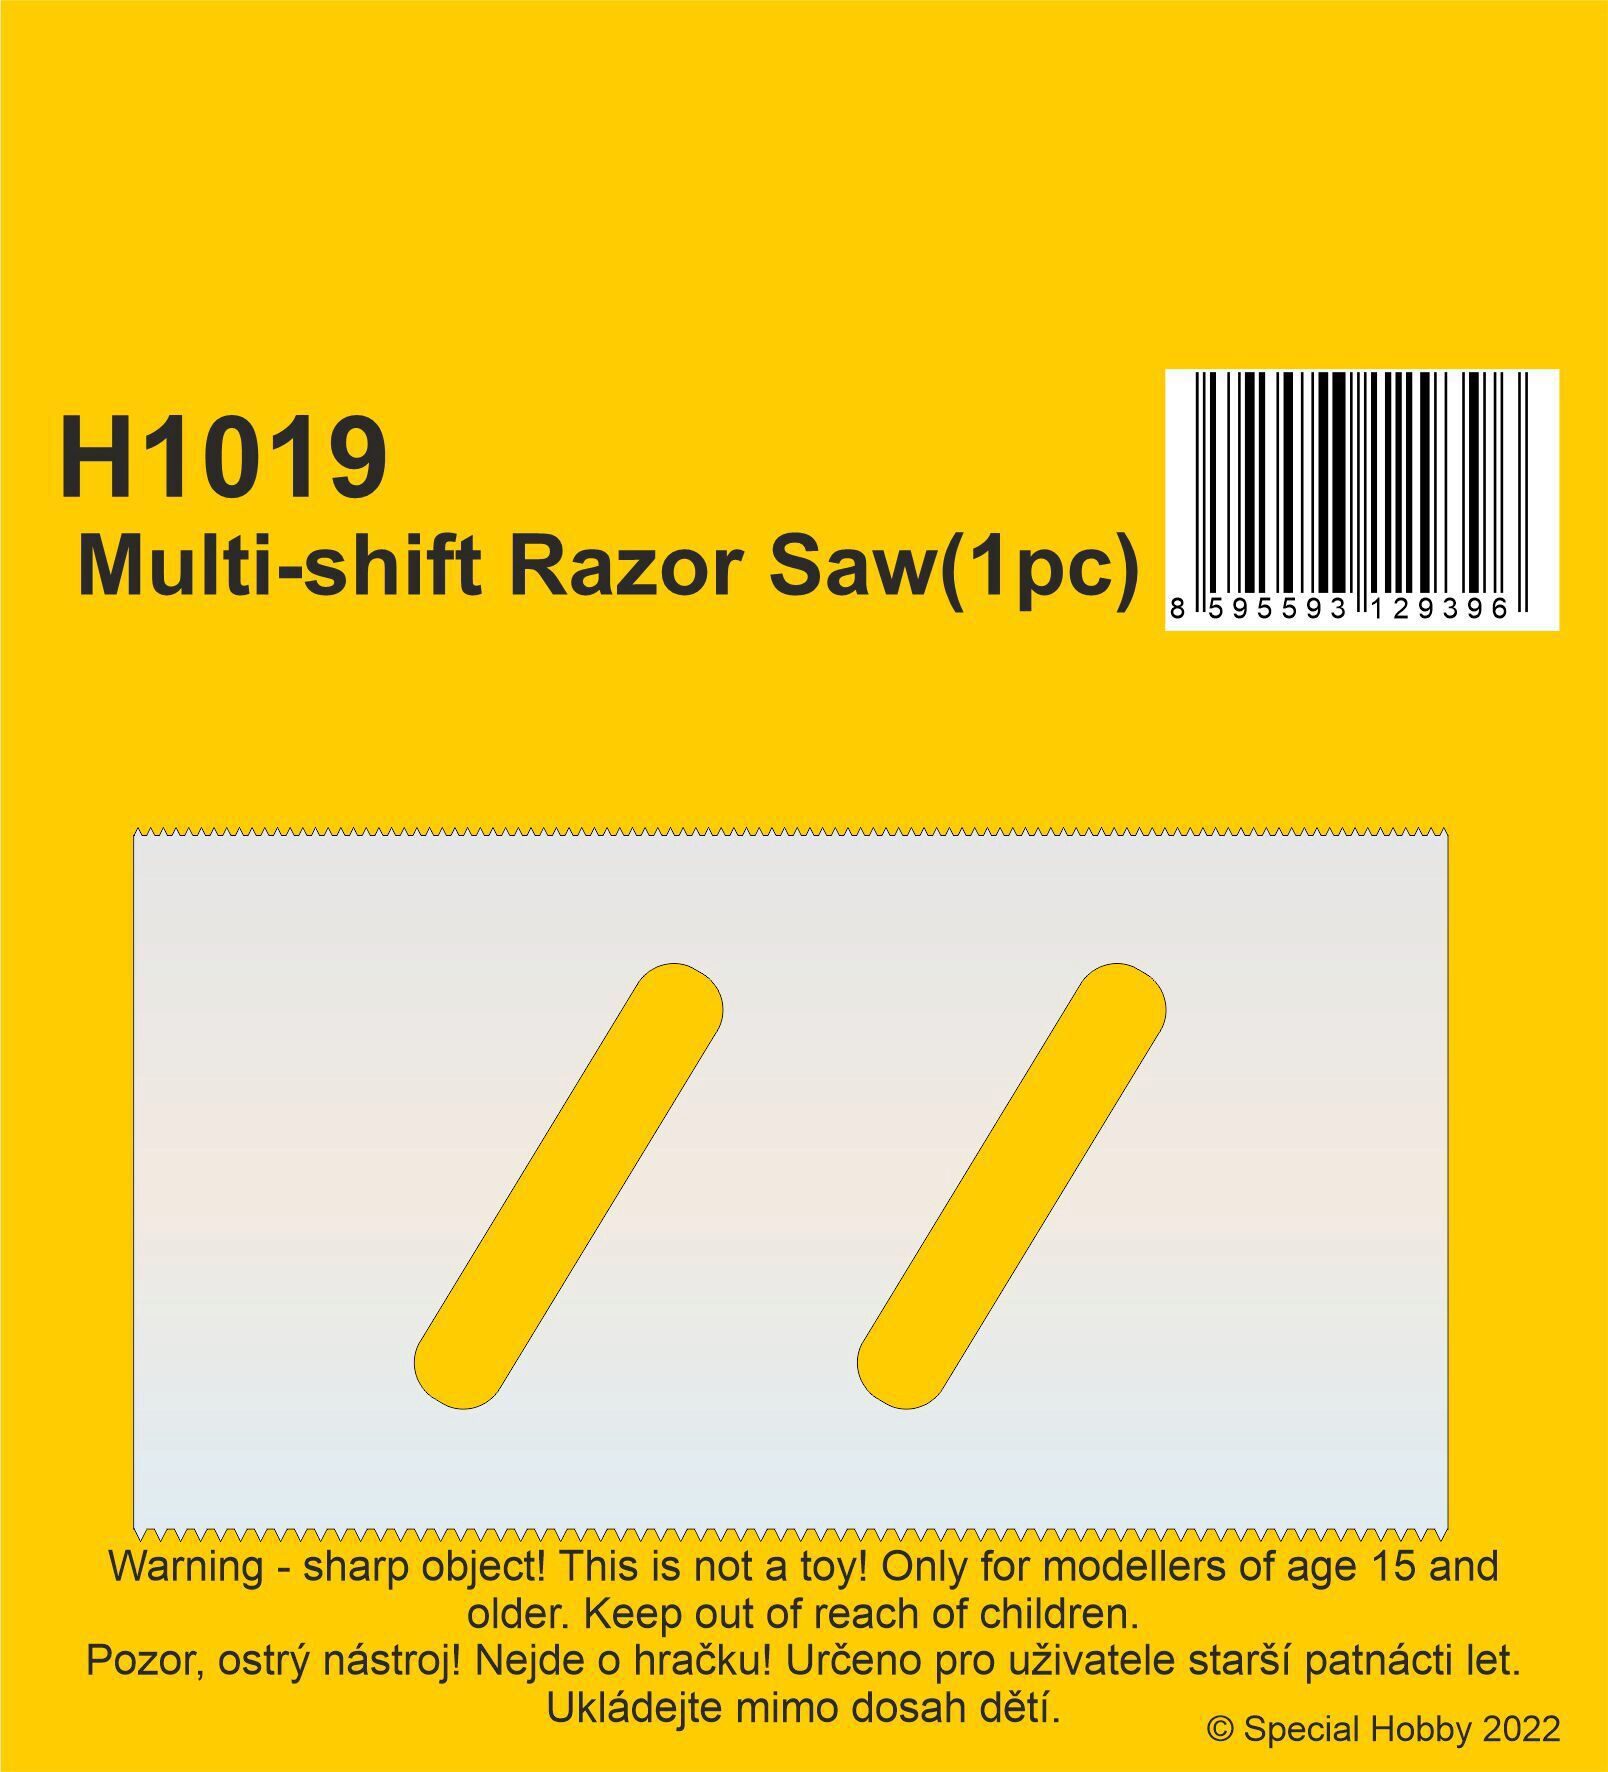 CMK 129-H1019 Mullti-shift Razor Saw